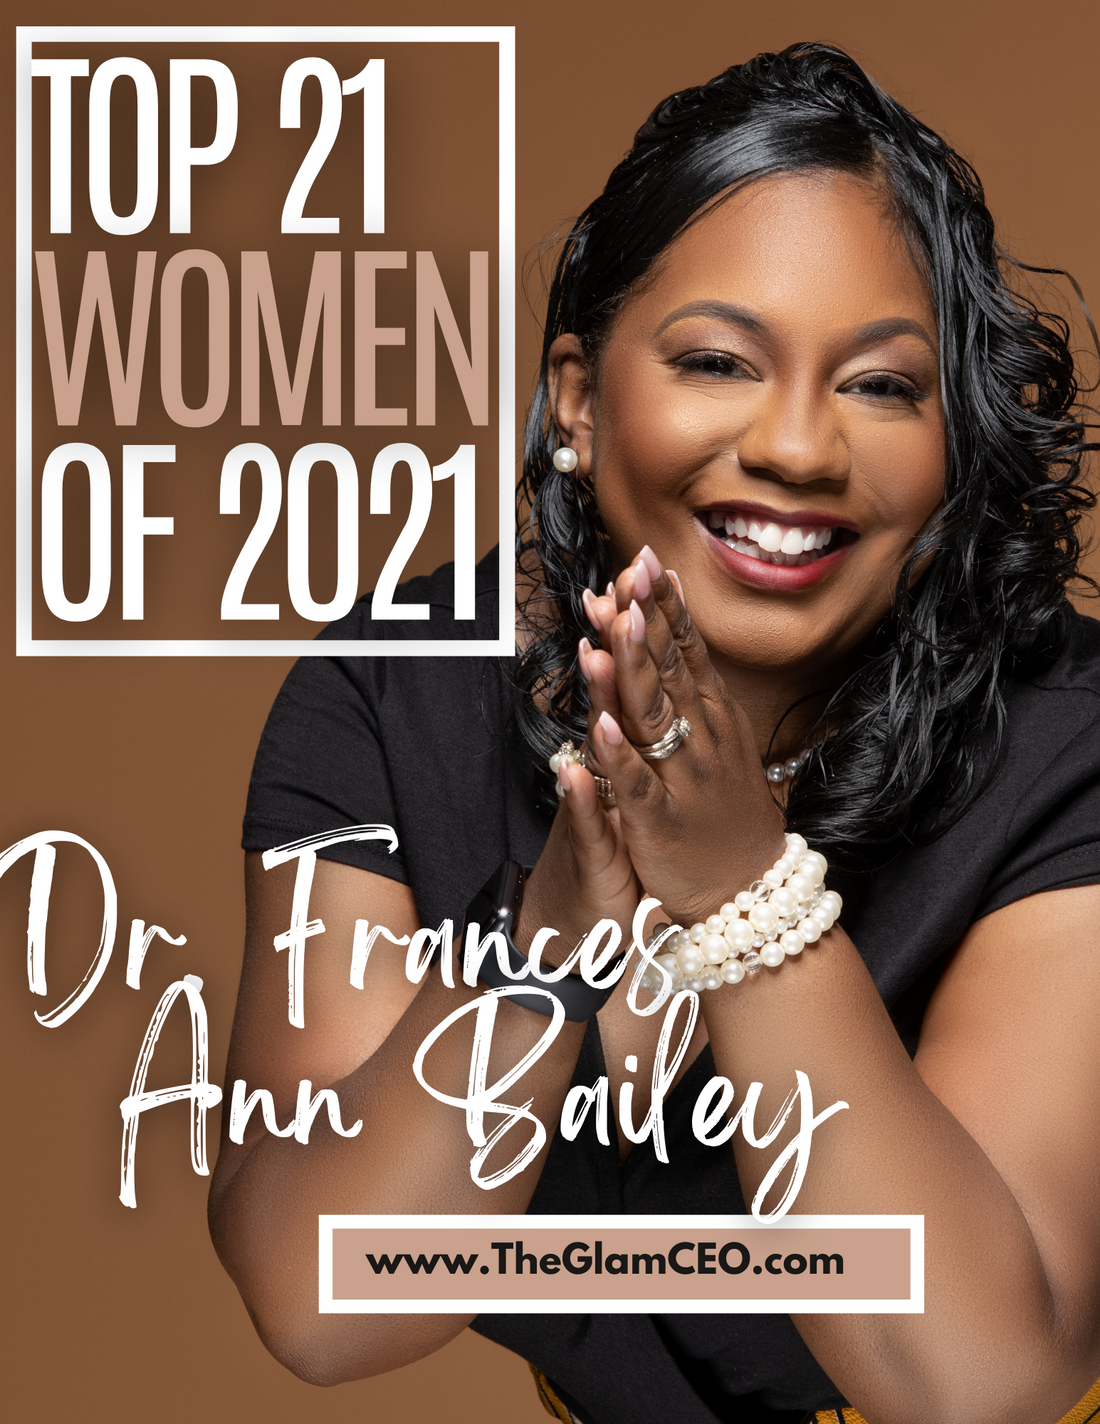 Top 21 Women of 2021: Dr. Frances Ann Bailey